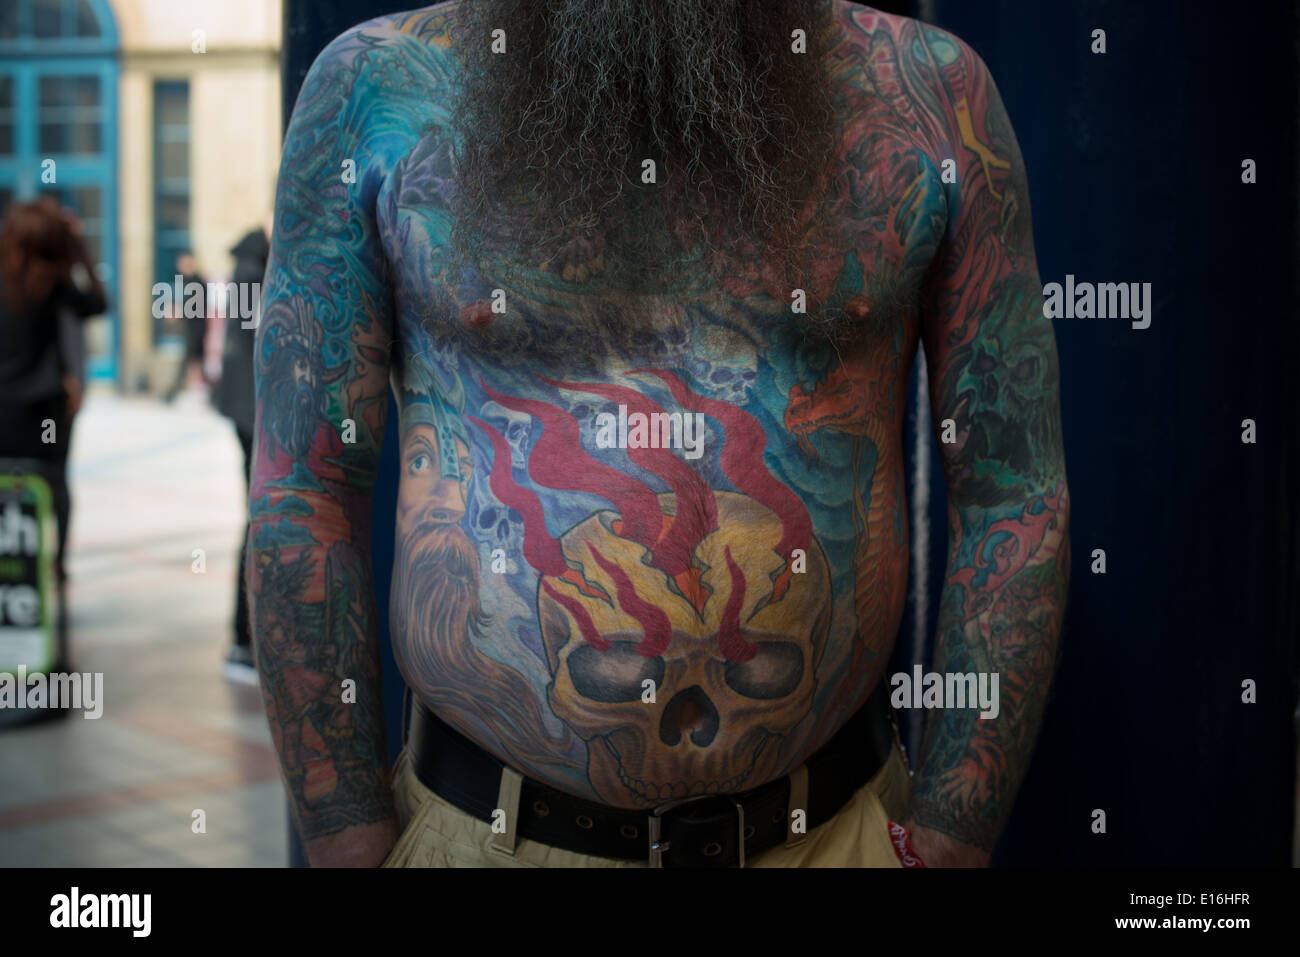 Great British Tattoo Show in North London Stock Photo - Alamy